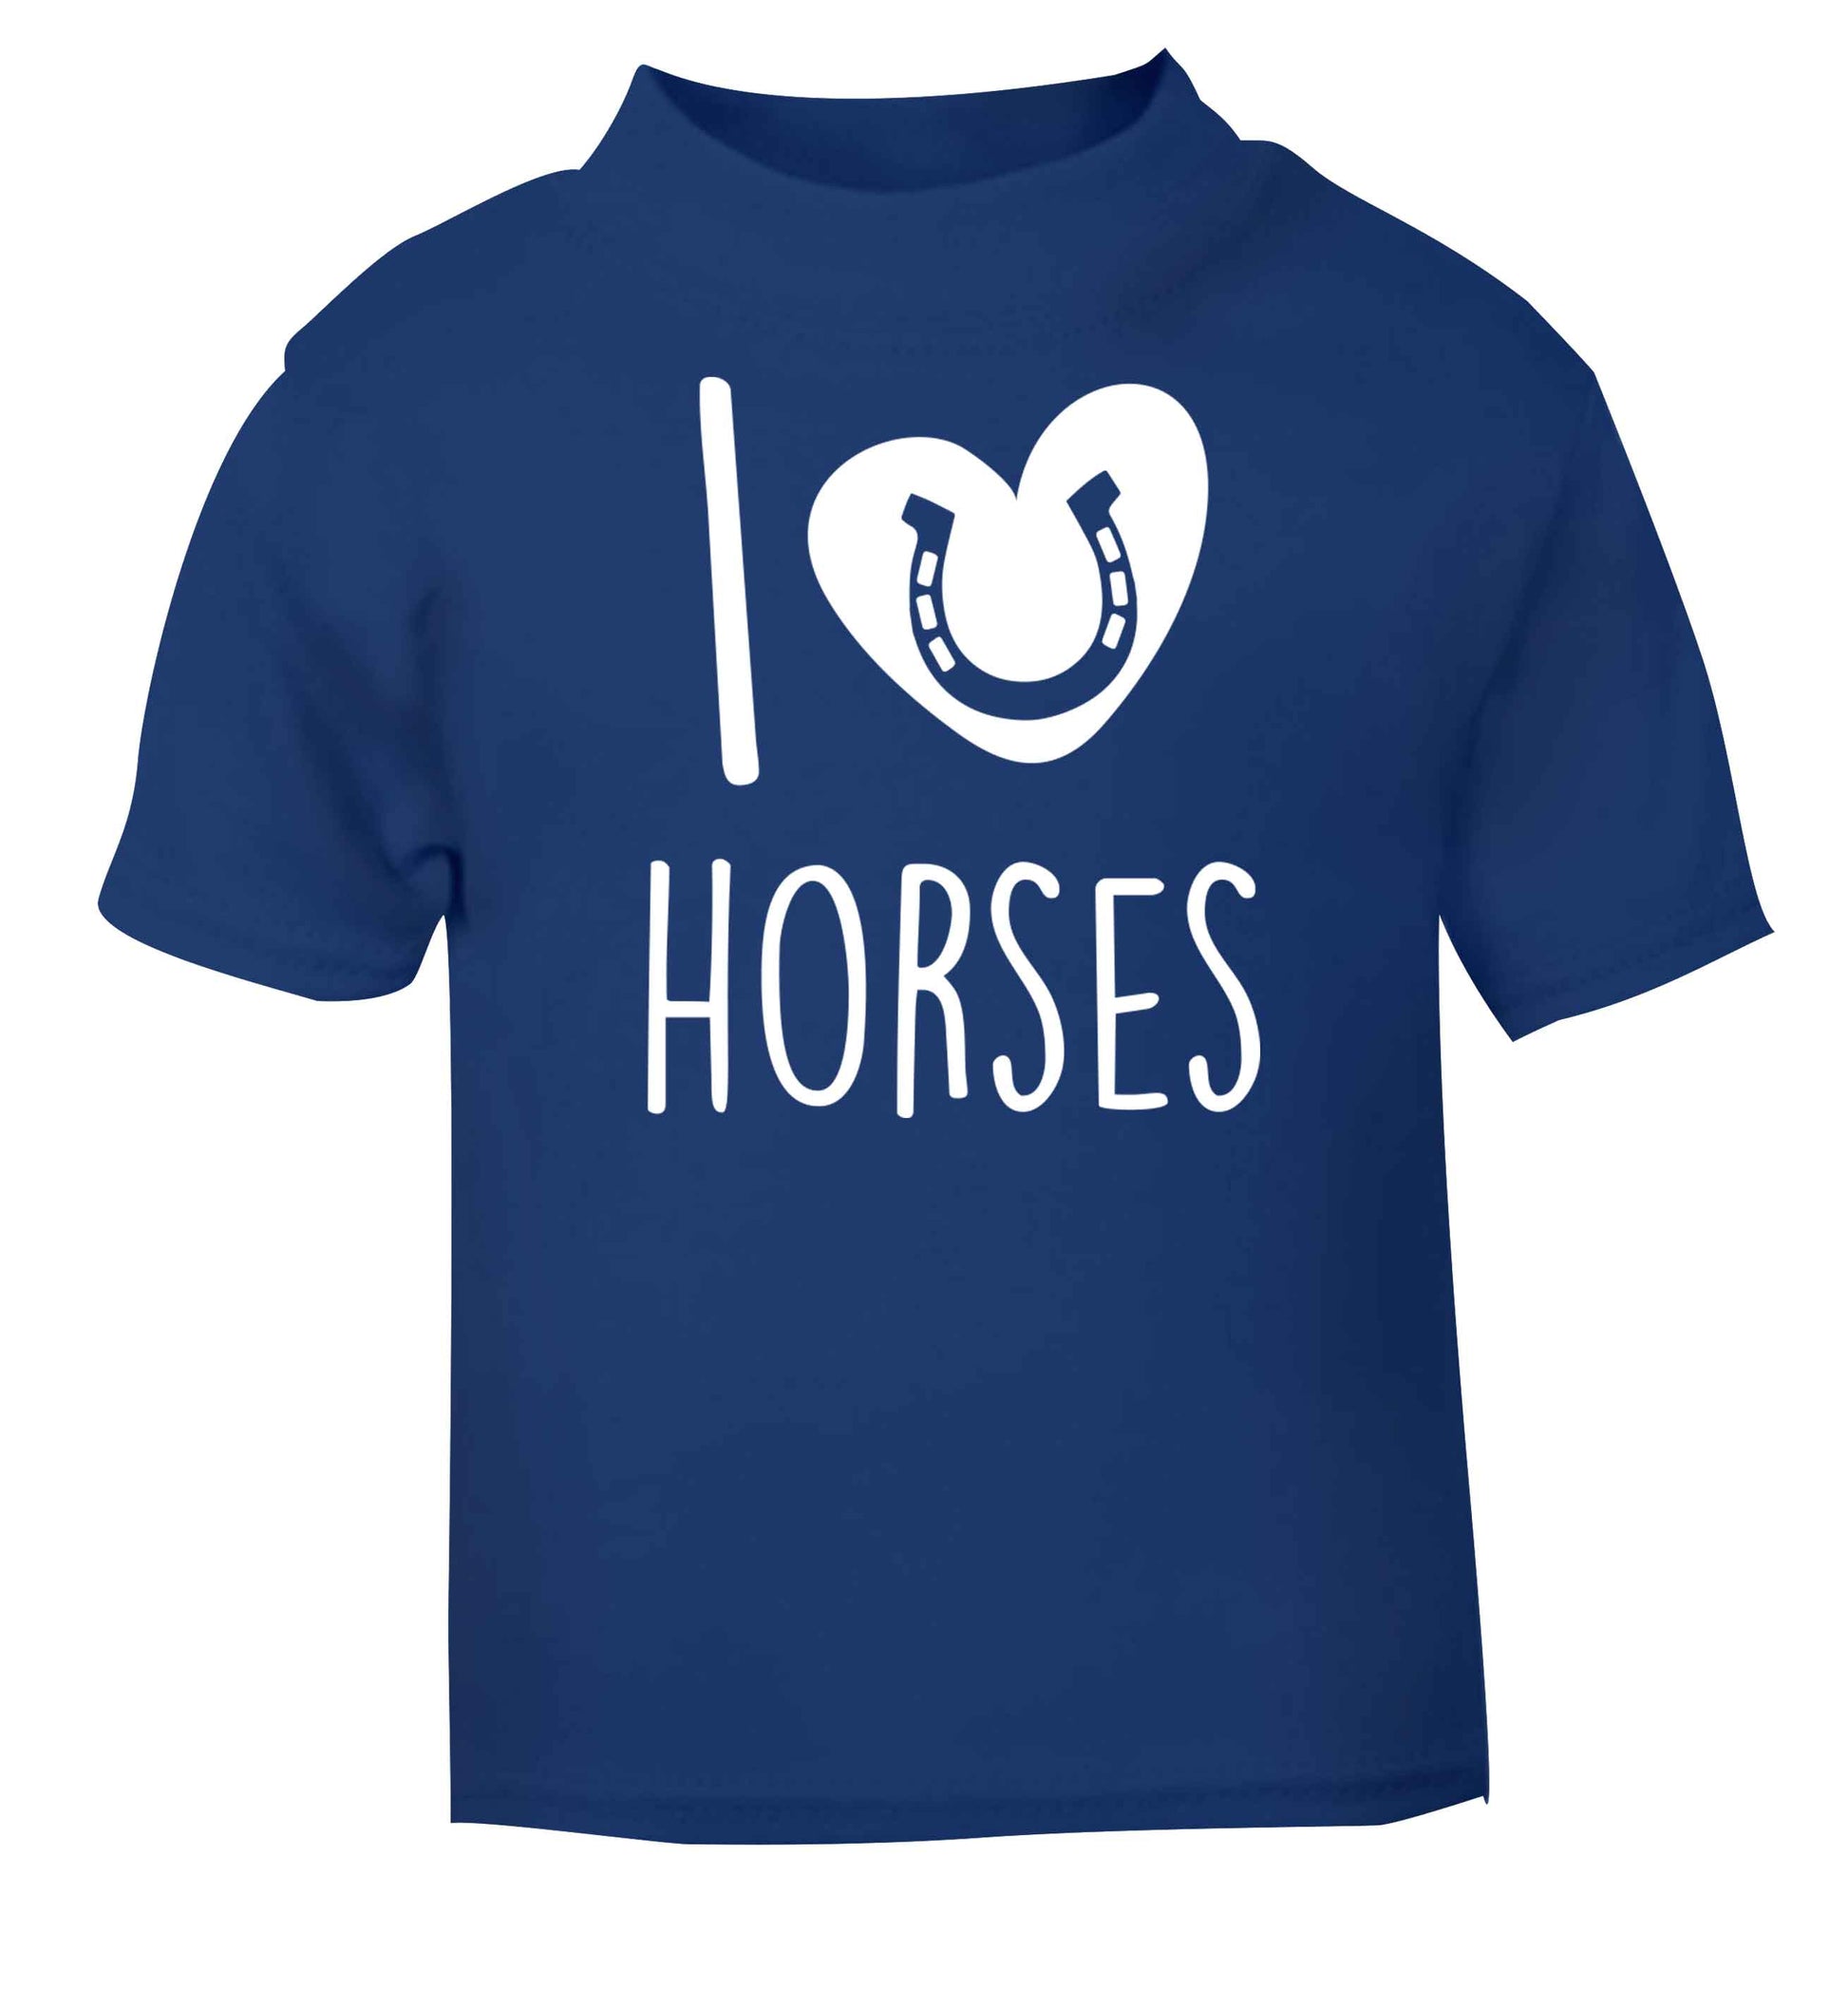 I love horses blue baby toddler Tshirt 2 Years